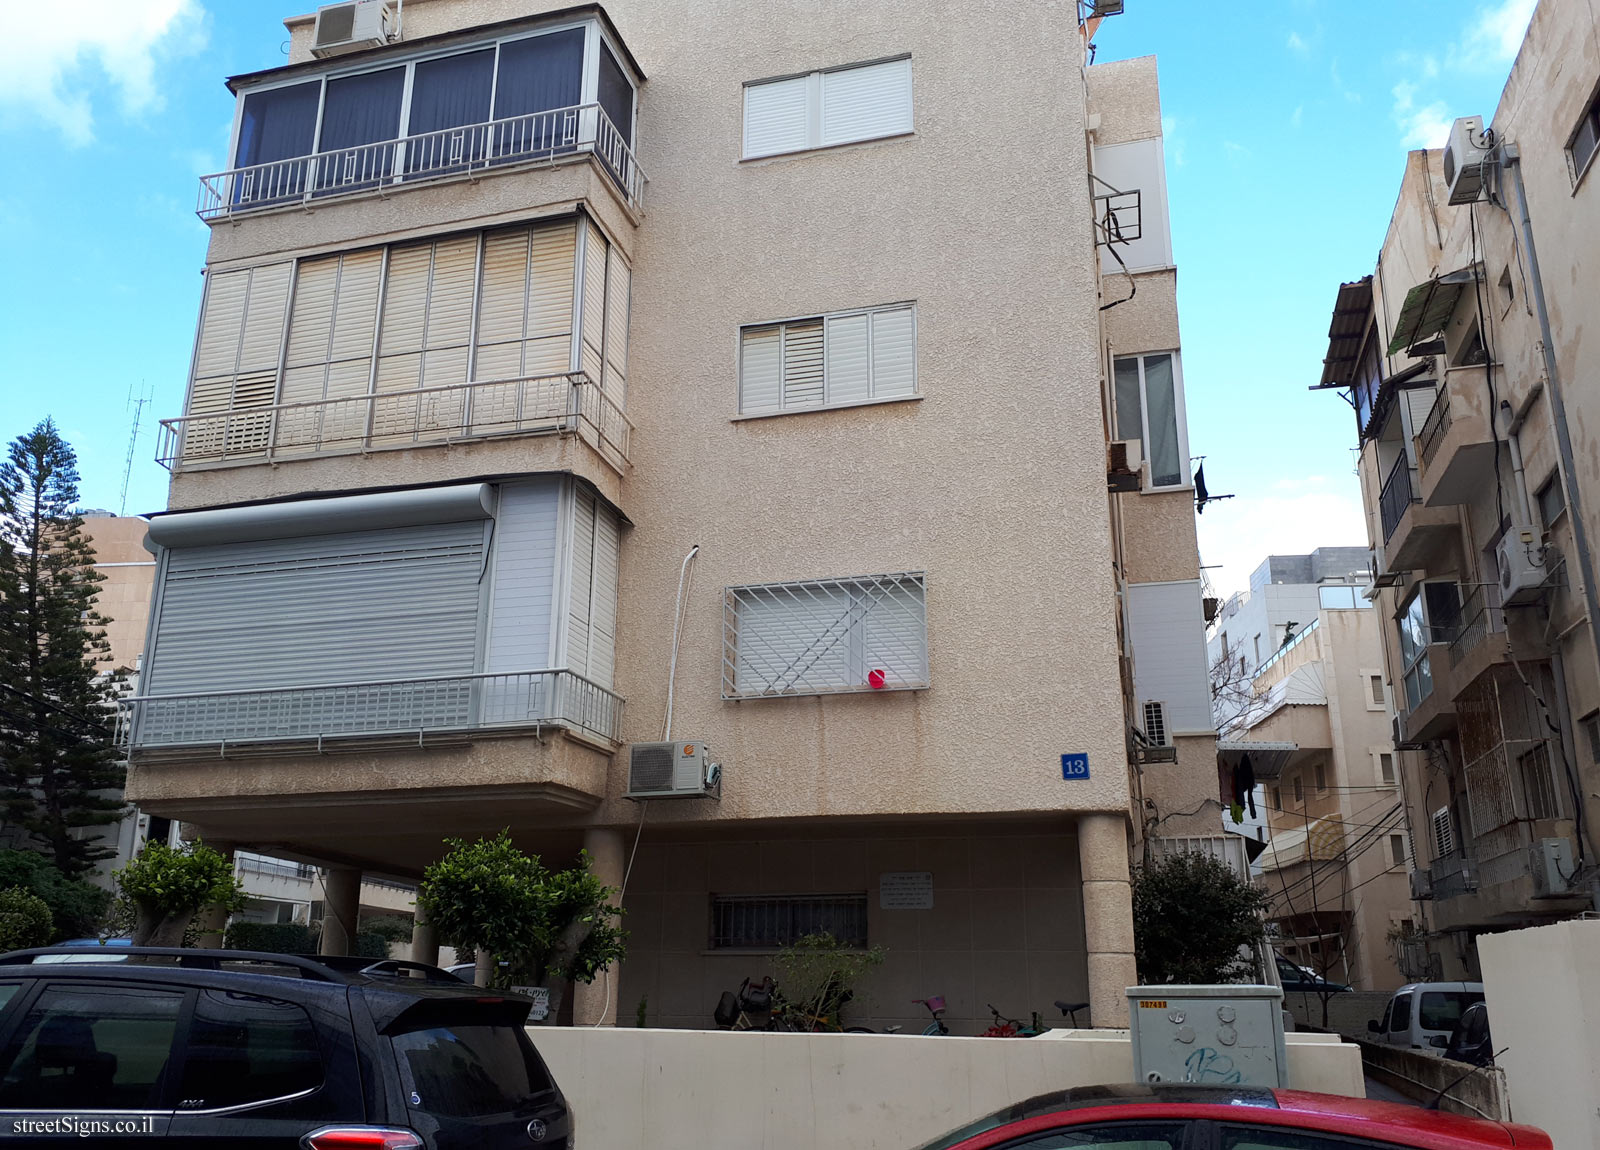 The house of Dr. Yitzhak Shenkar - Ruppin St 13, Tel Aviv-Yafo, Israel